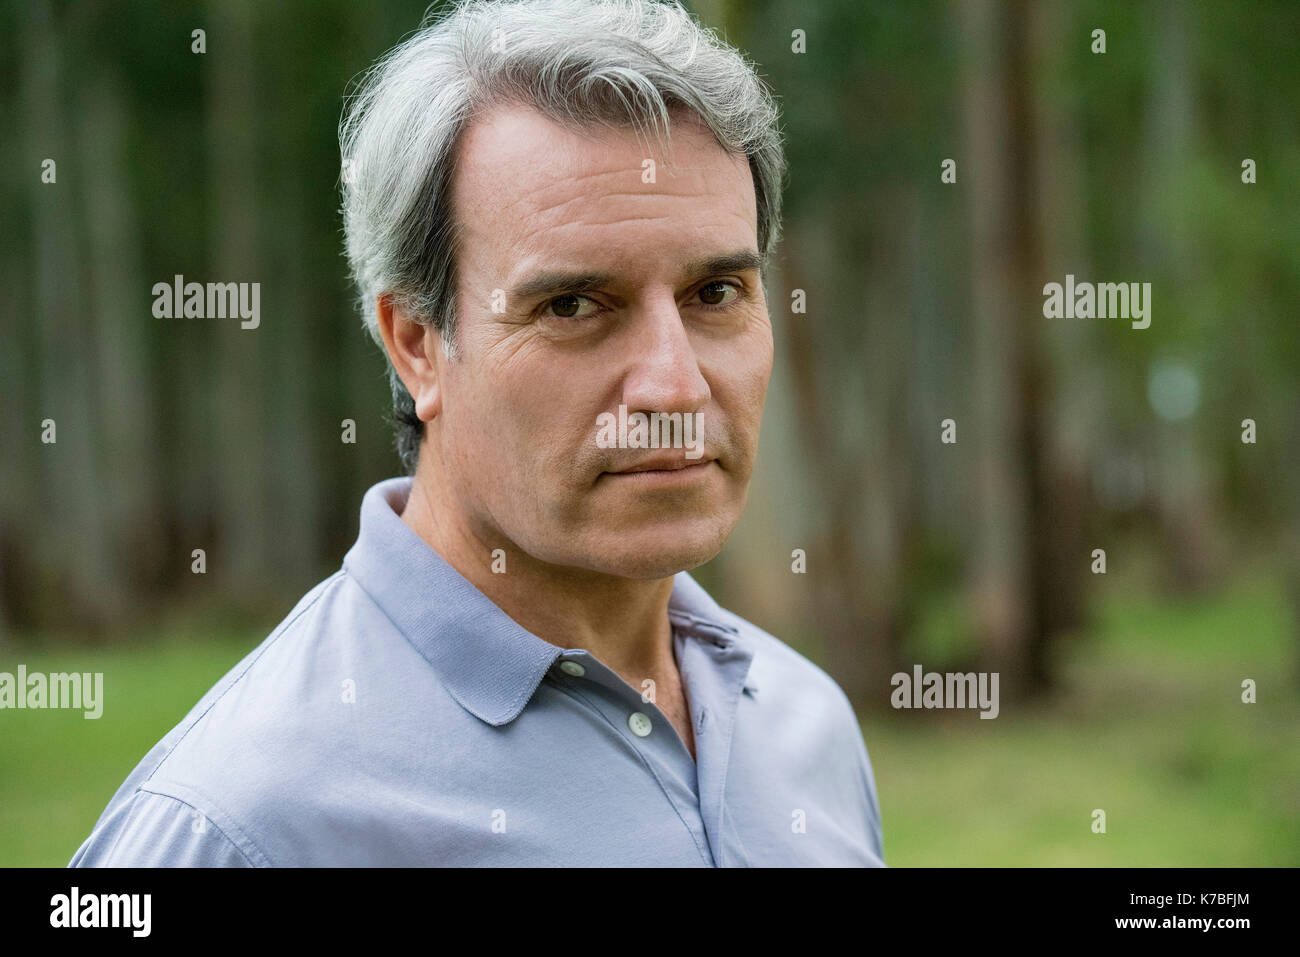 Mature man, portrait Stock Photo